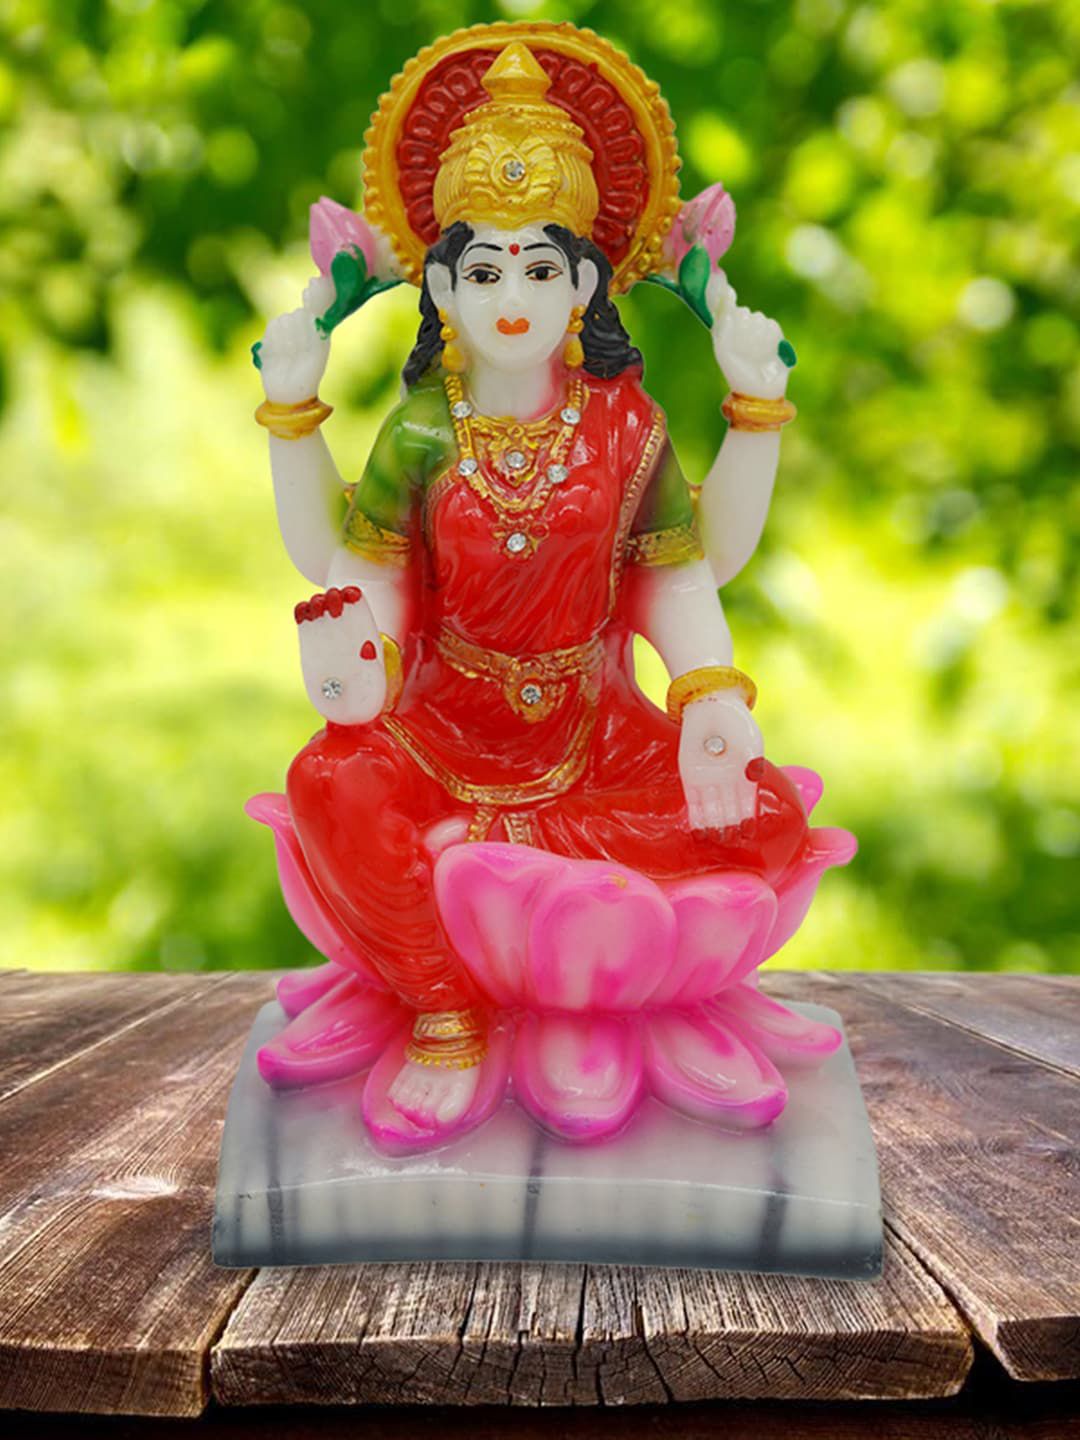 Gallery99 Red & White Goddess Maha Laxmi Idol Showpieces Price in India